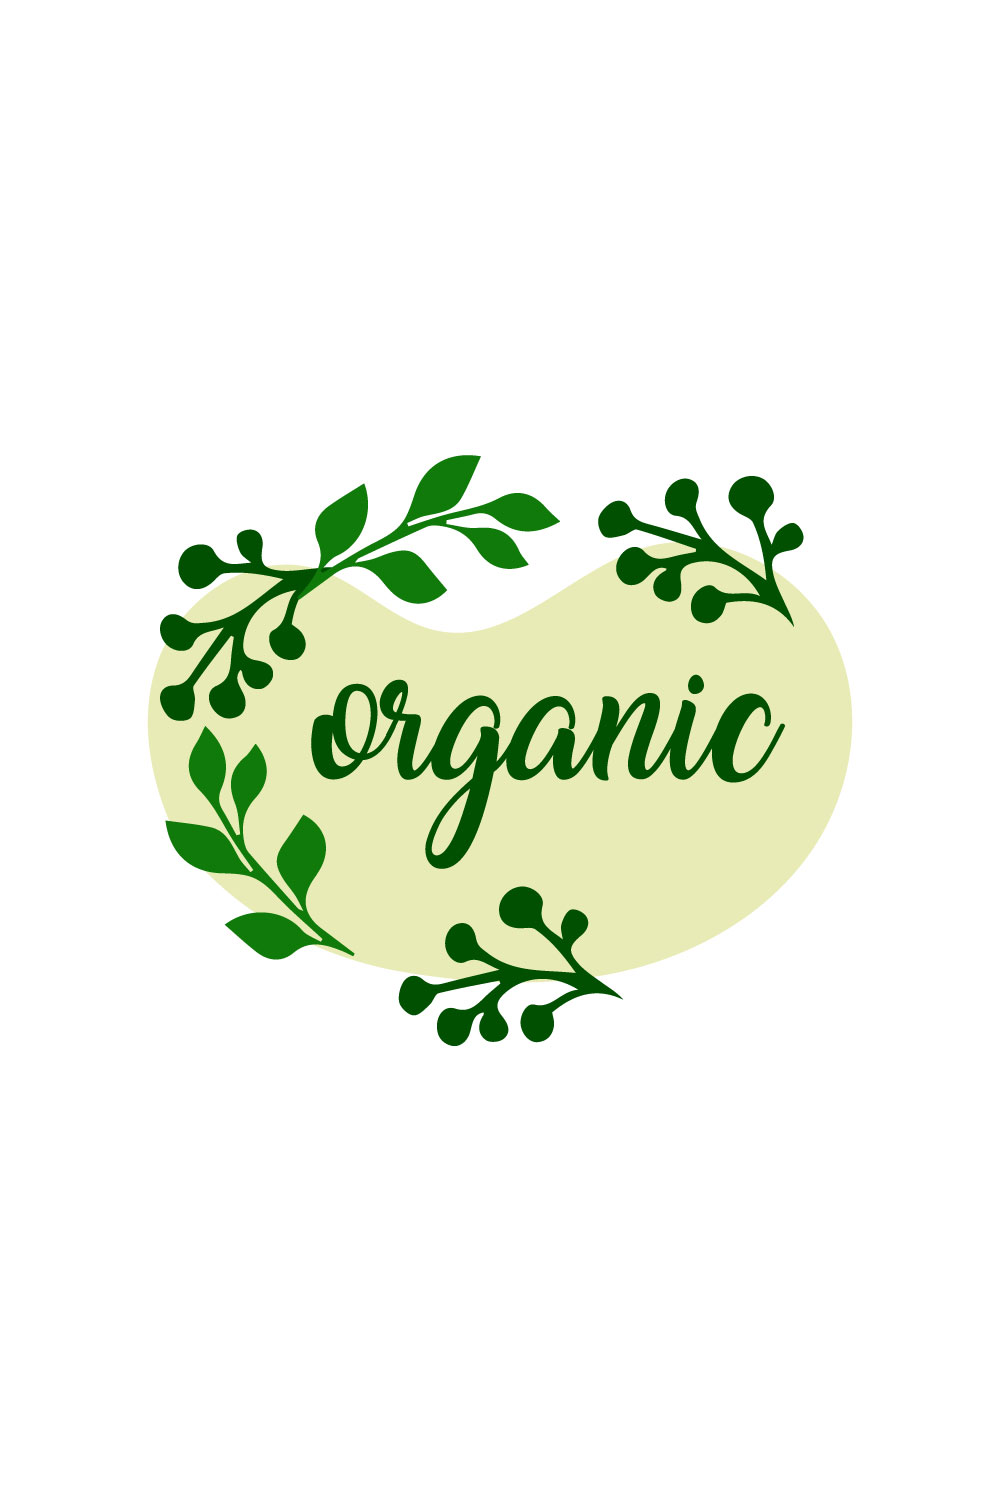 Free organic leaf floral logo pinterest preview image.